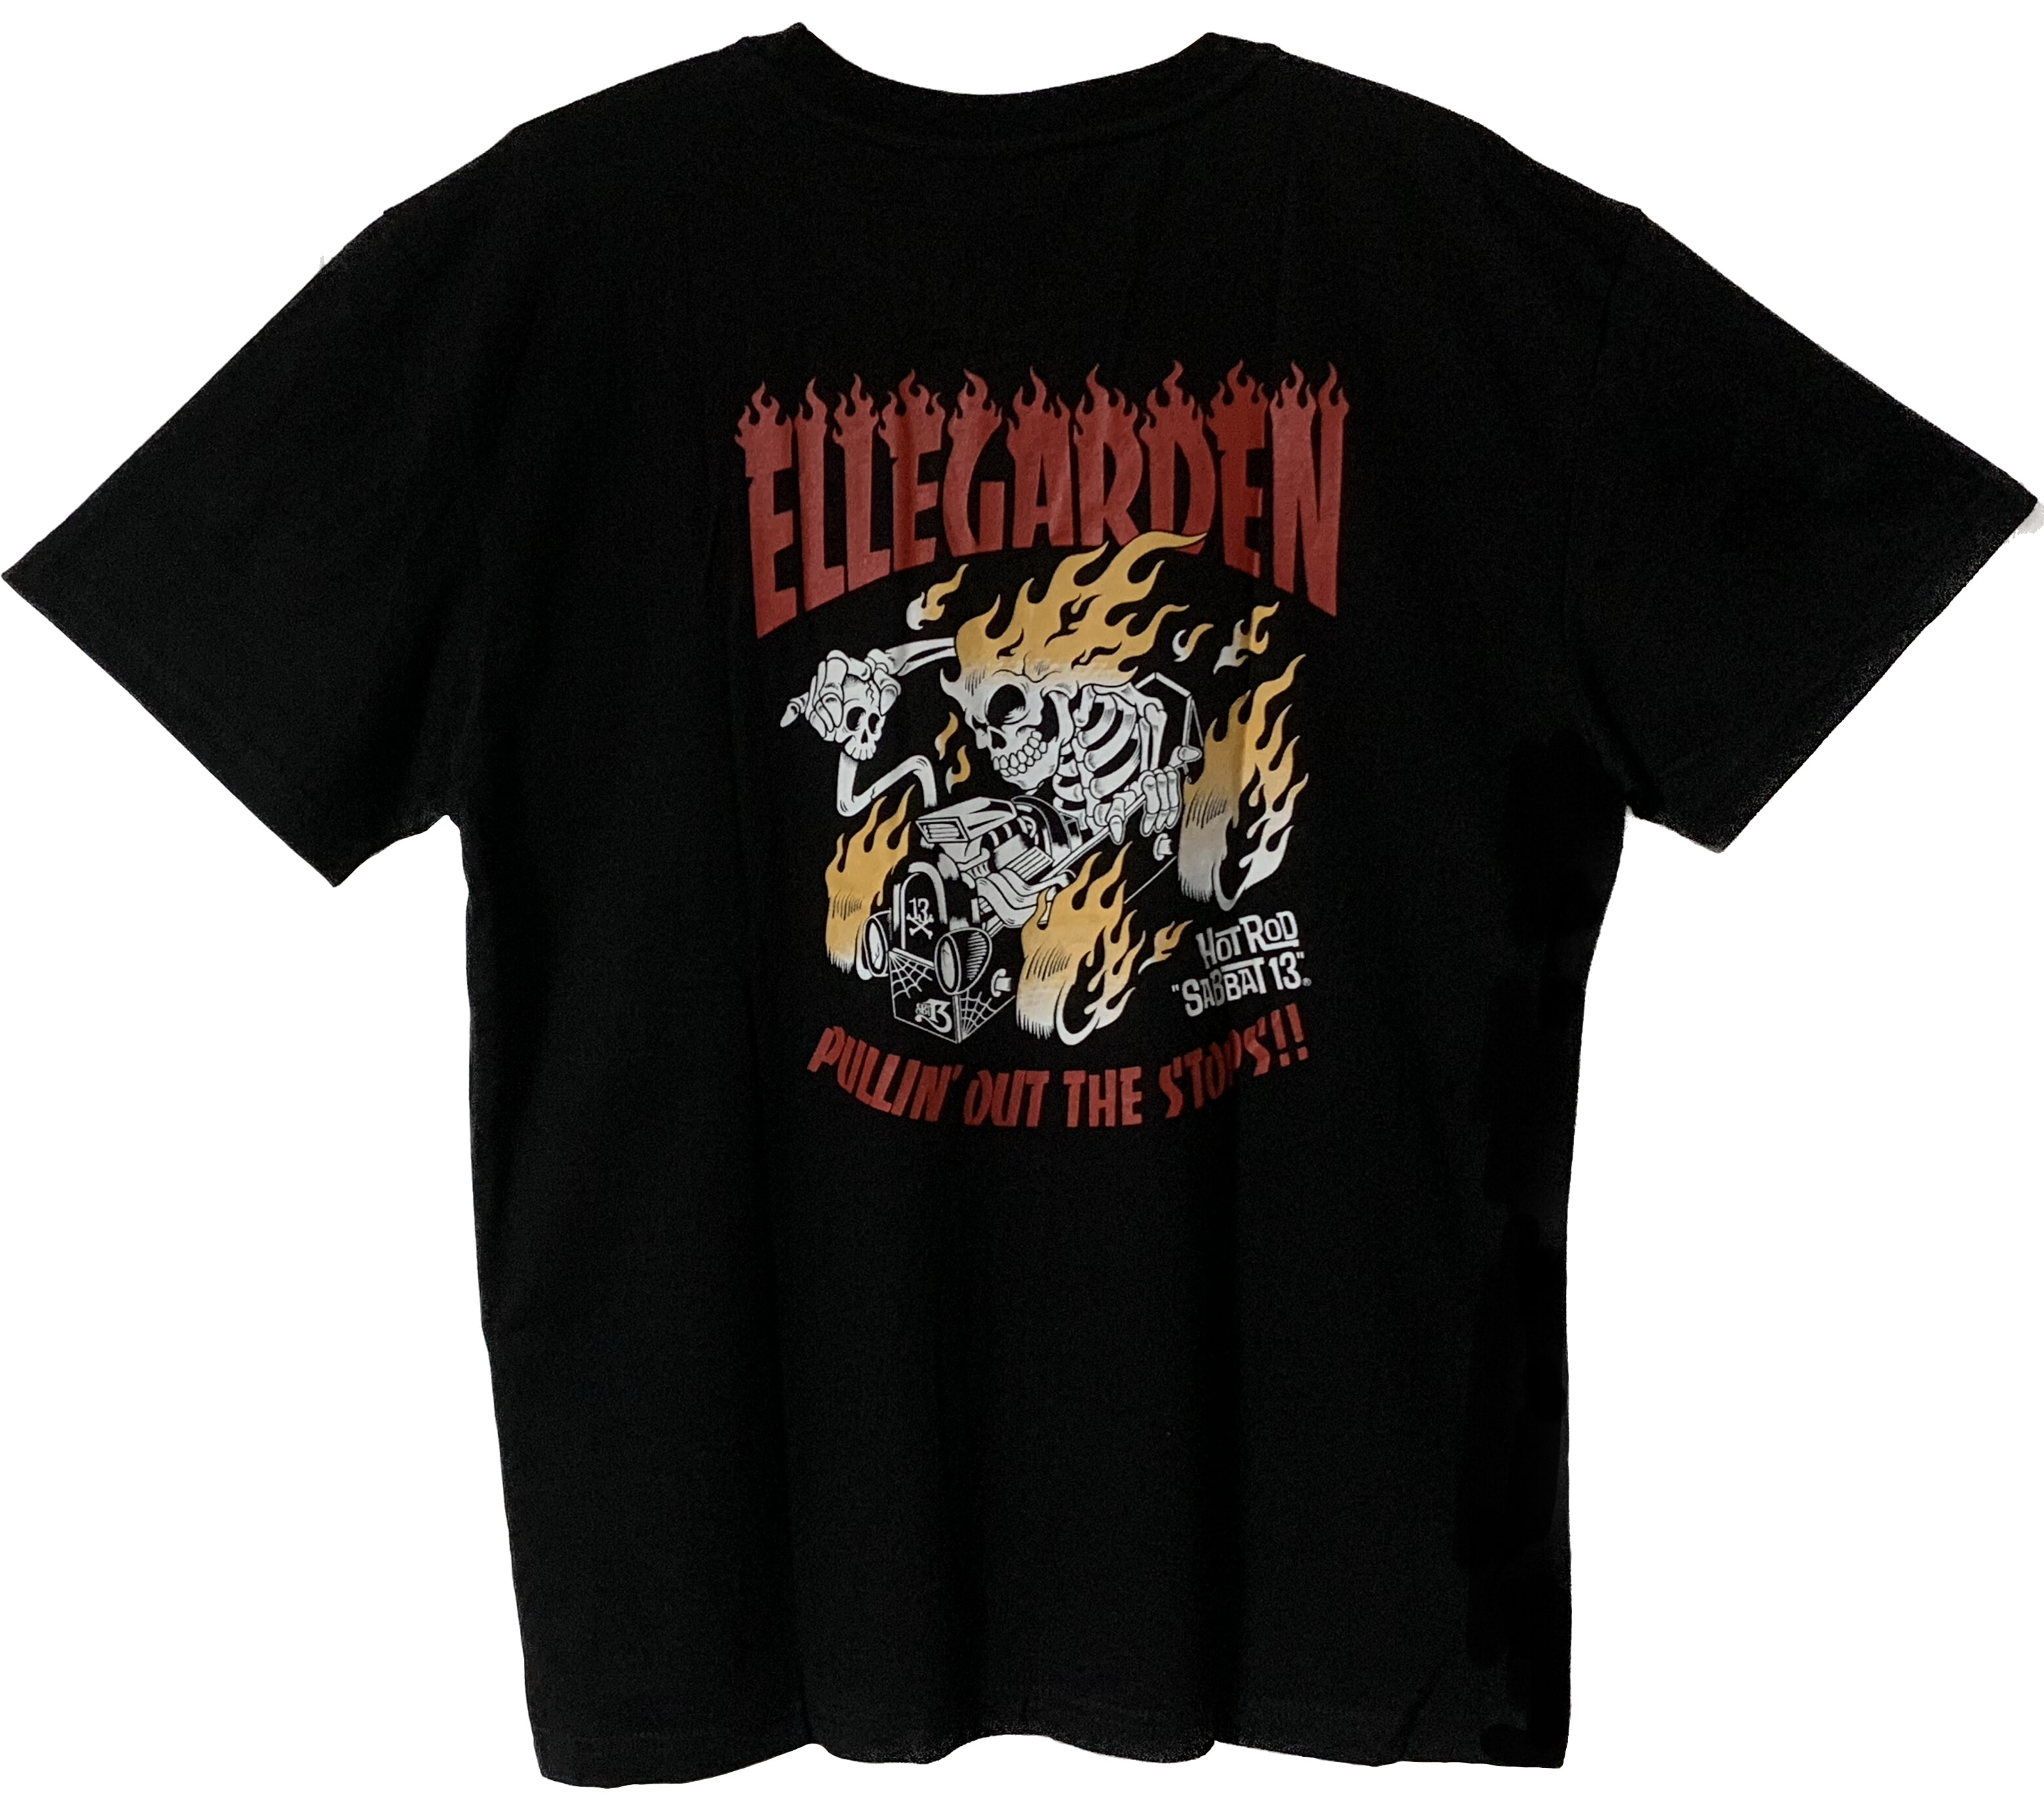 Ellegarden (엘르가든) - SABBAT13 티셔츠 [블랙 컬러/M사이즈]